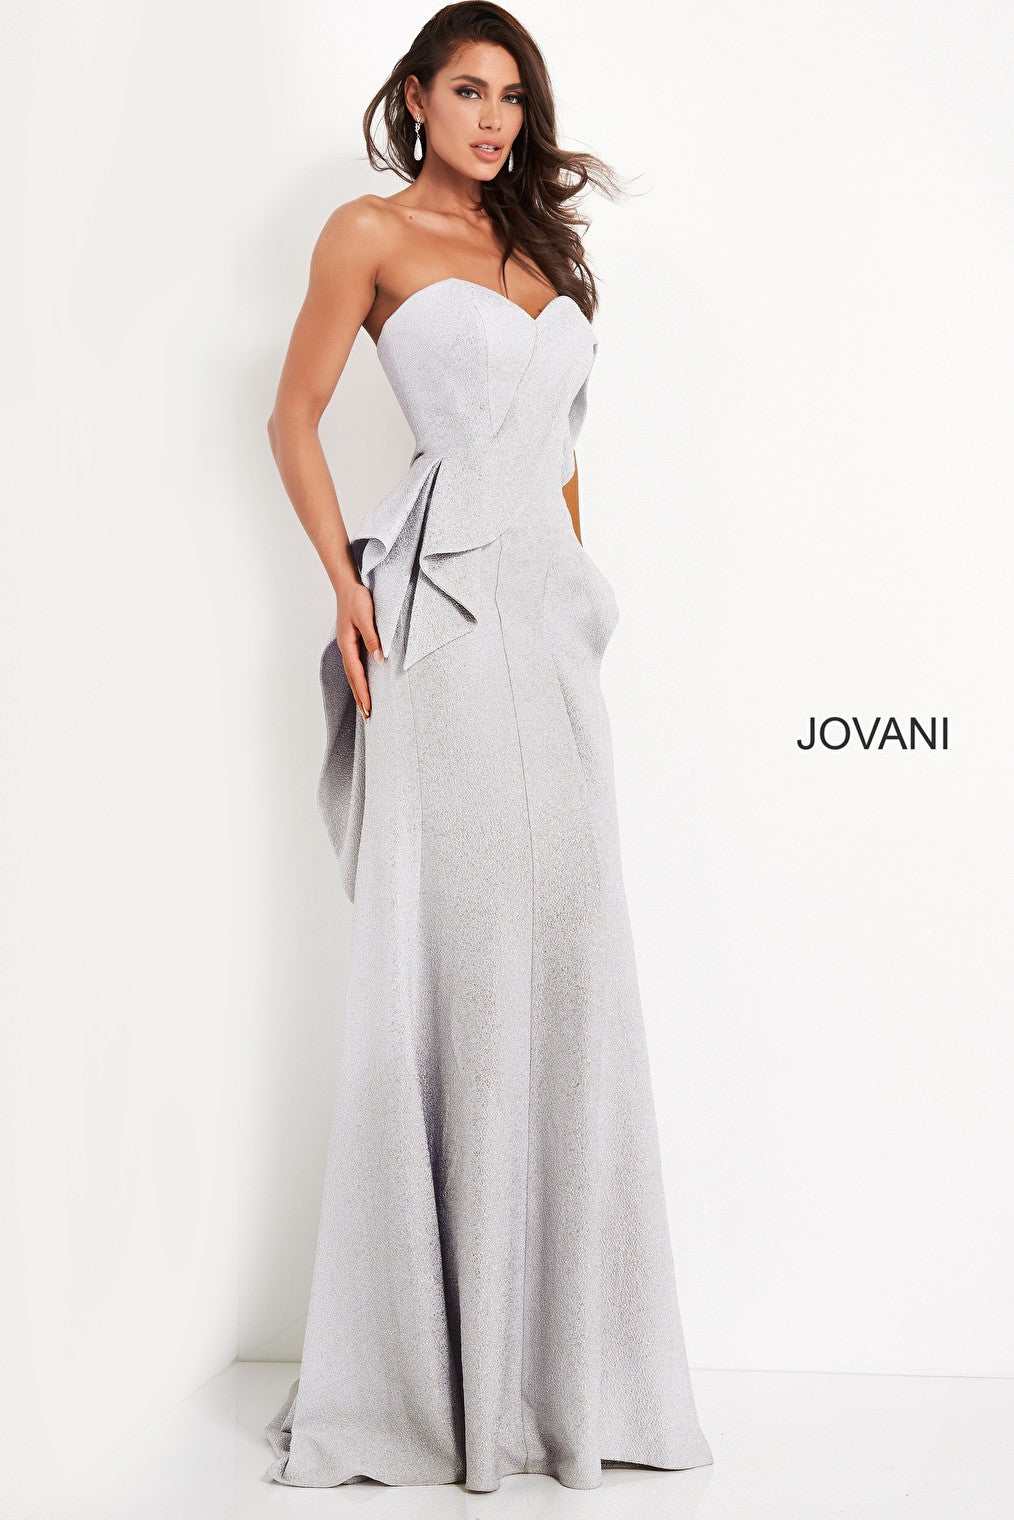 Jovani 04430 Silver Strapless Sweetheart Neck Evening Dress